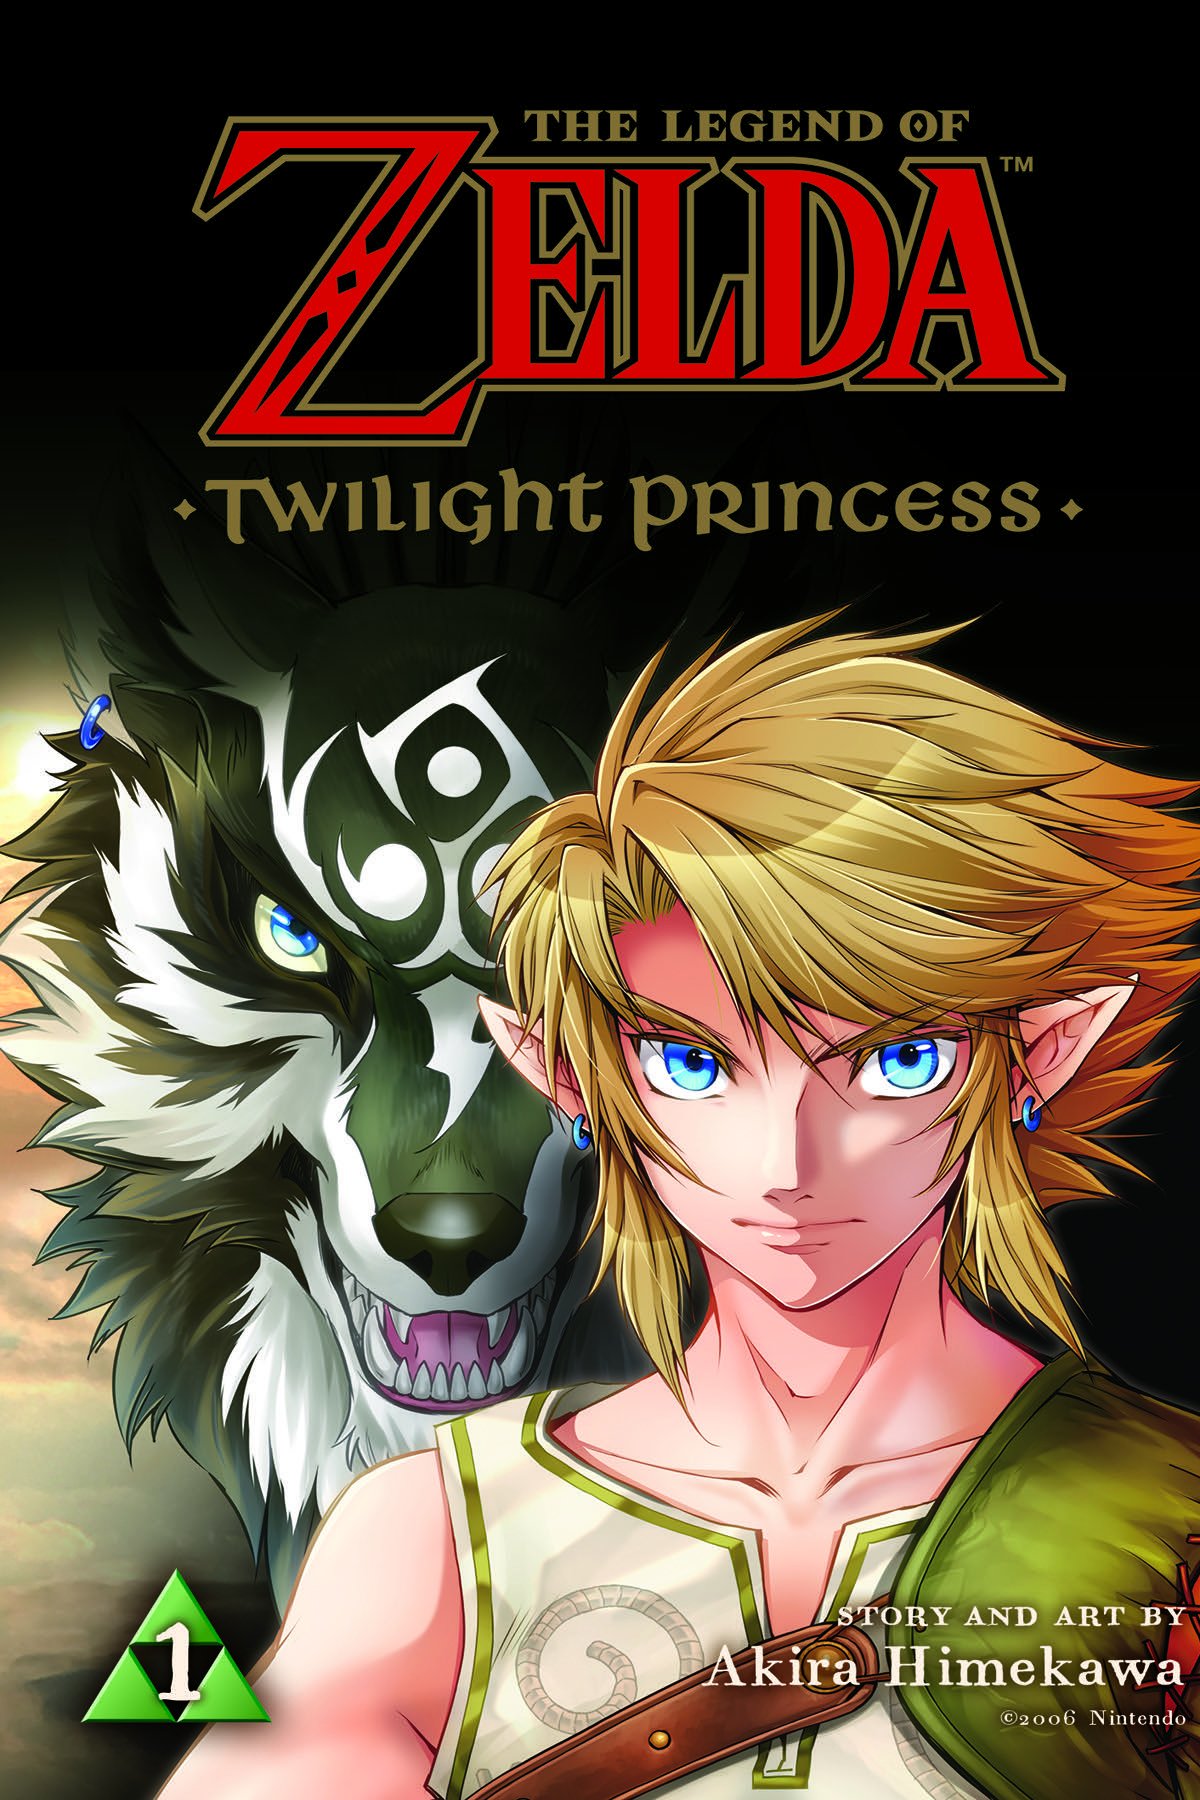 The Legend of Zelda: Breath of the Wild as a Studio Ghibli Anime